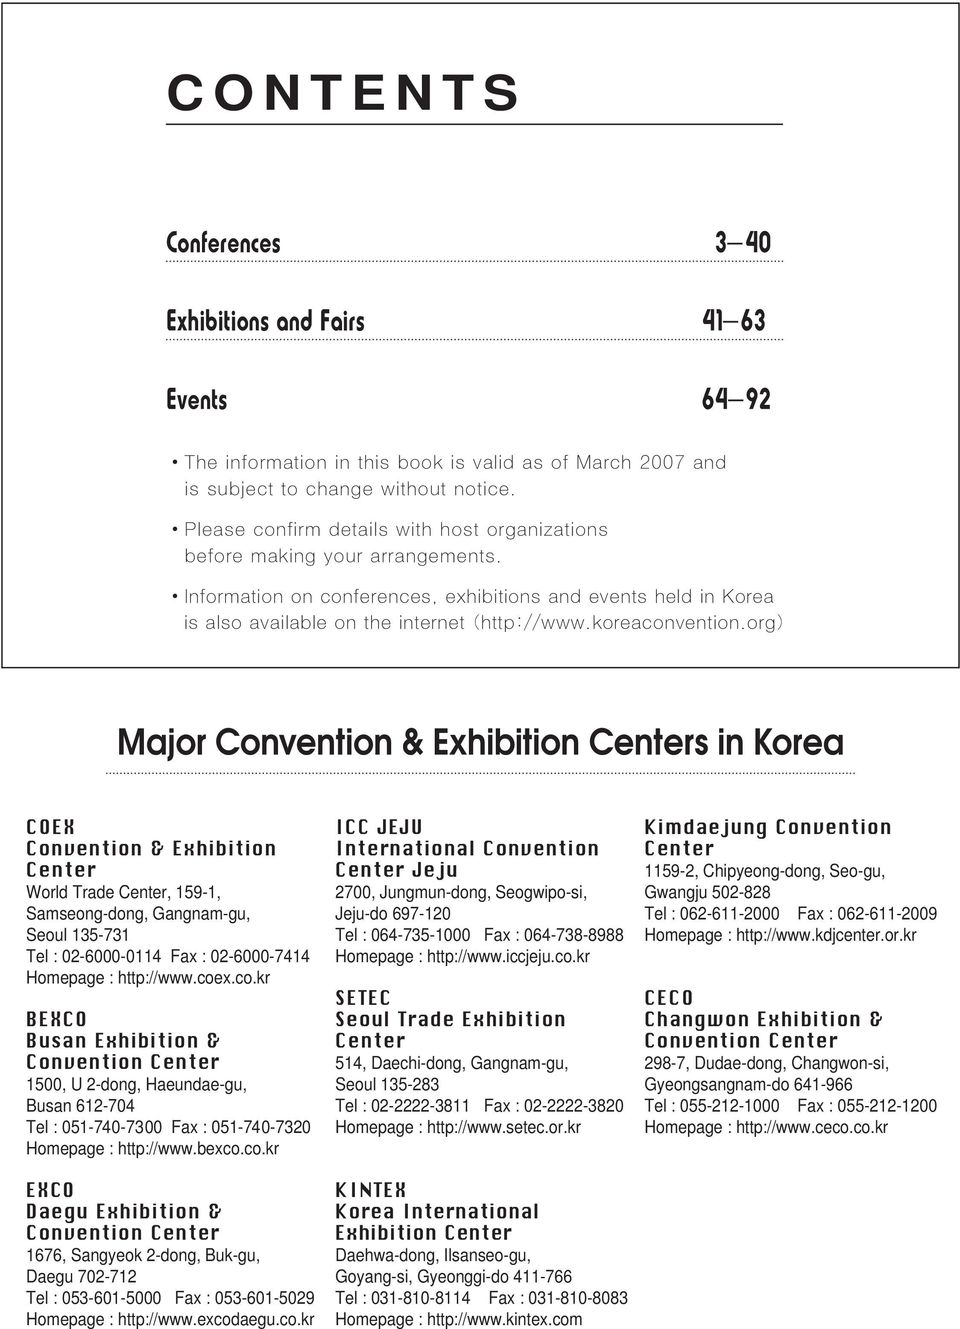 x.co.kr BEXCO Busan Exhibition & Convention Center 1500, U 2-dong, Haeundae-gu, Busan 612-704 Tel : 051-740-7300 Fax : 051-740-7320 Homepage : http://www.bexco.co.kr EXCO Daegu Exhibition & Convention Center 1676, Sangyeok 2-dong, Buk-gu, Daegu 702-712 Tel : 053-601-5000 Fax : 053-601-5029 Homepage : http://www.